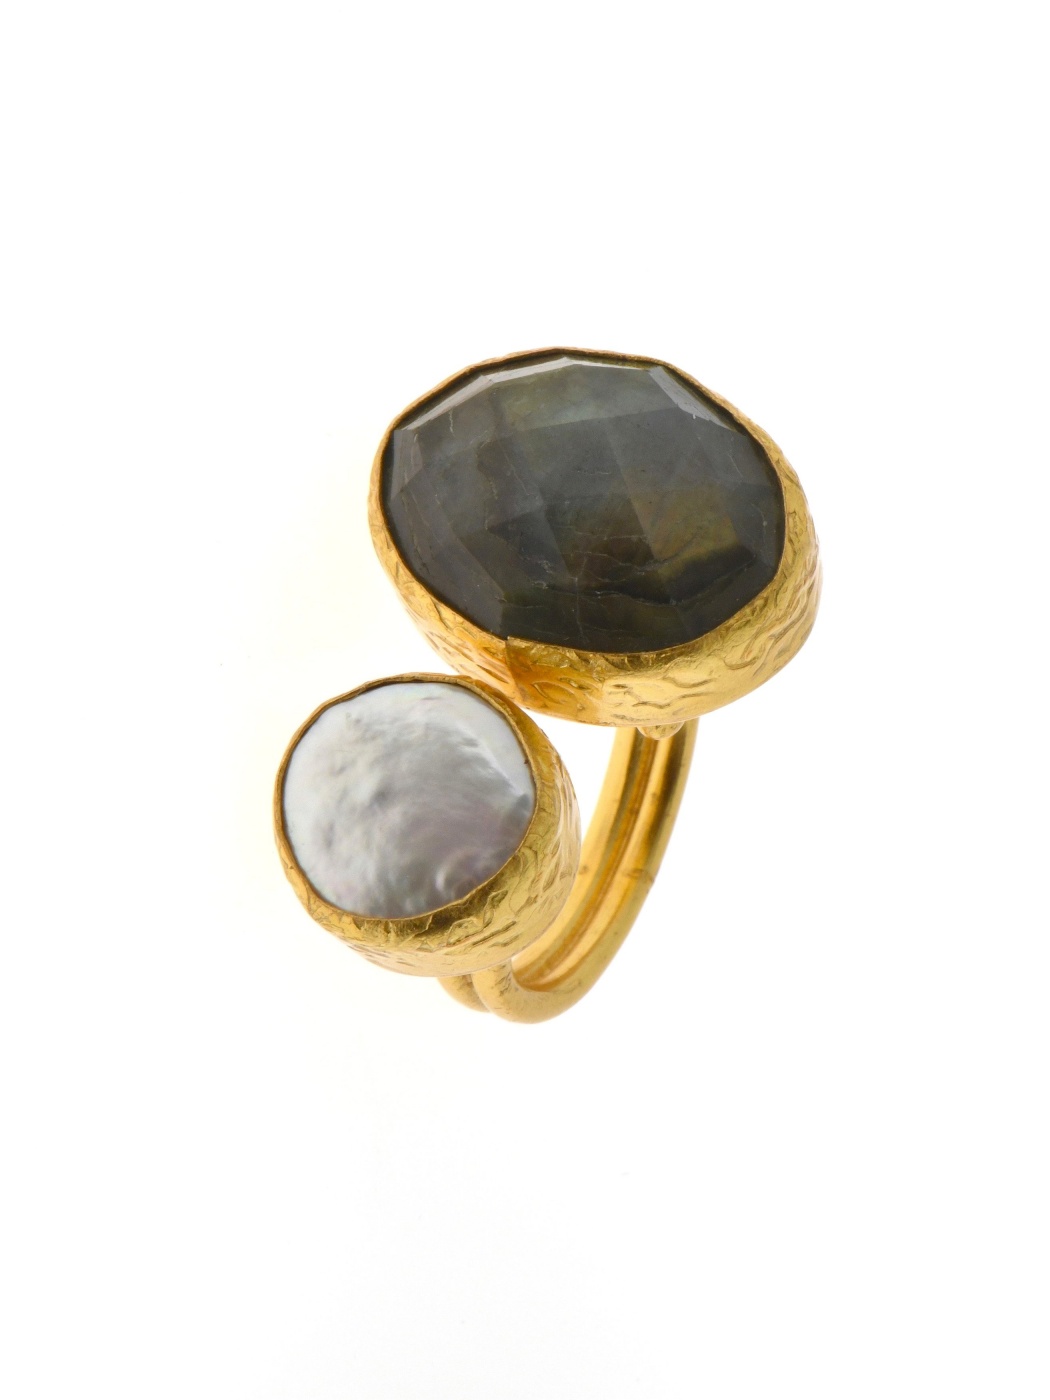 Labradorite Ethnic Jewelry Brass Handmade Ring US Size 8.75 R-12623